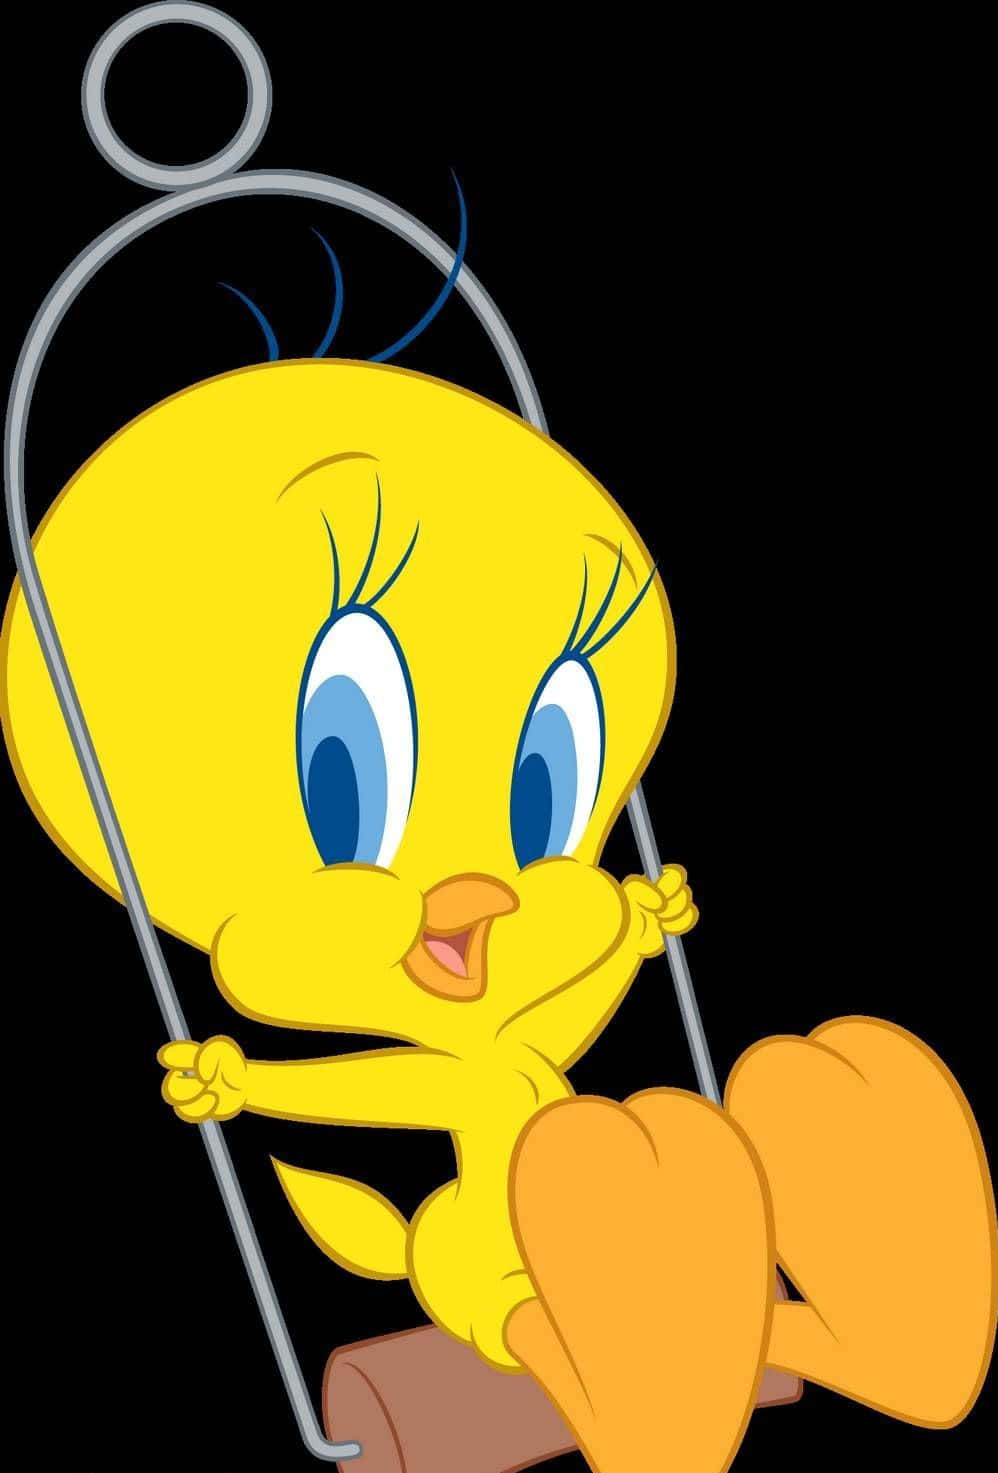 Tweety Bird the Mischievous Animated Star